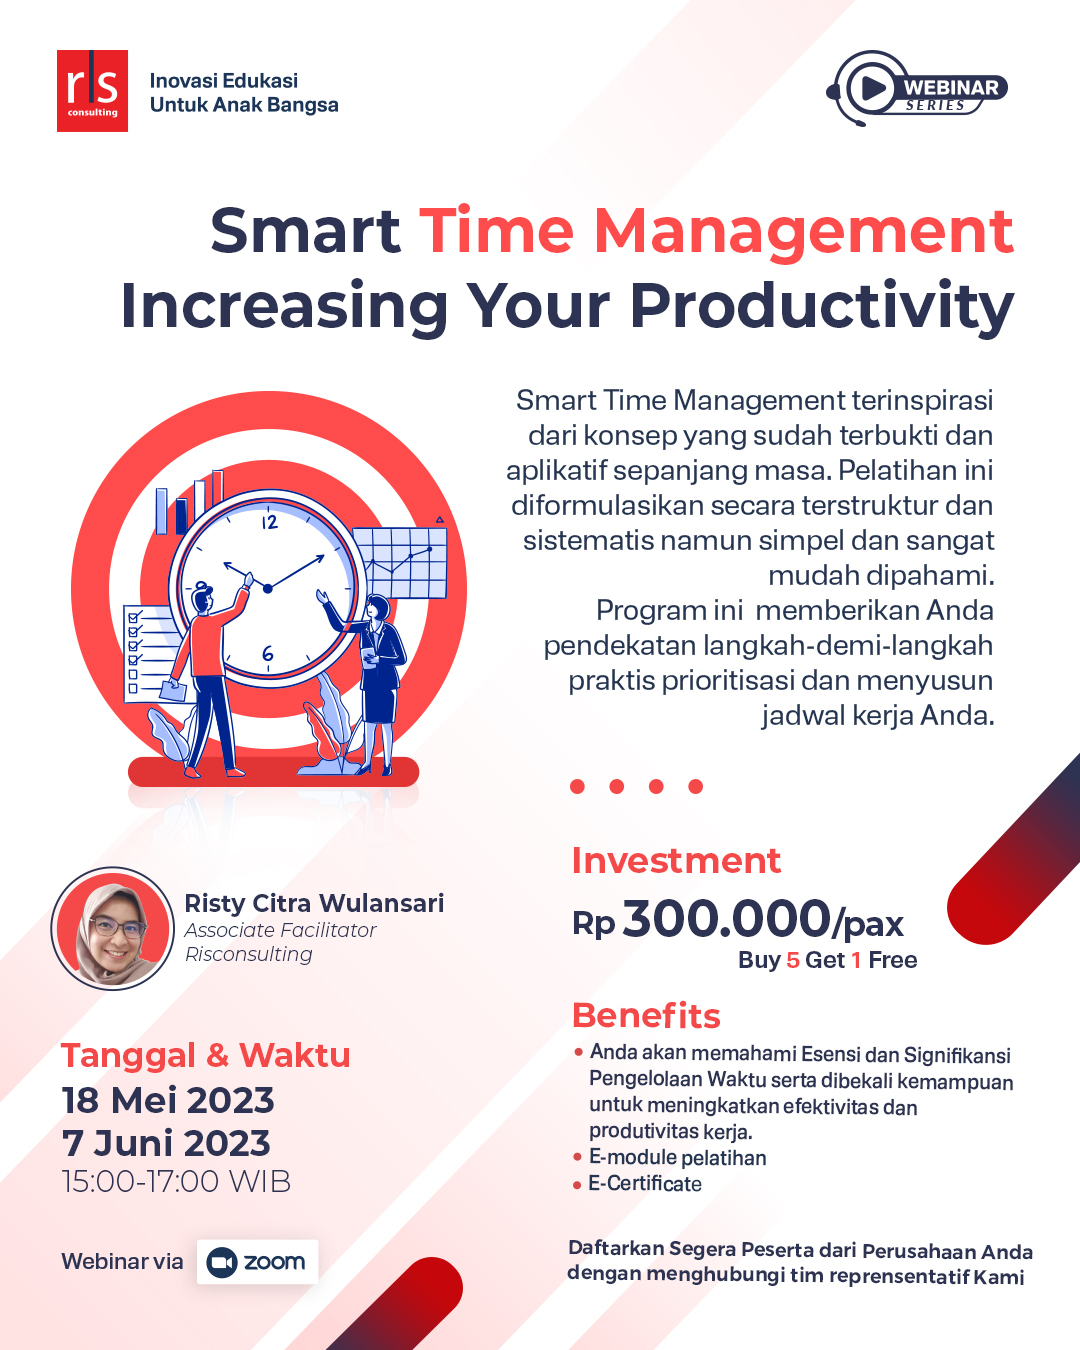 Smart time management